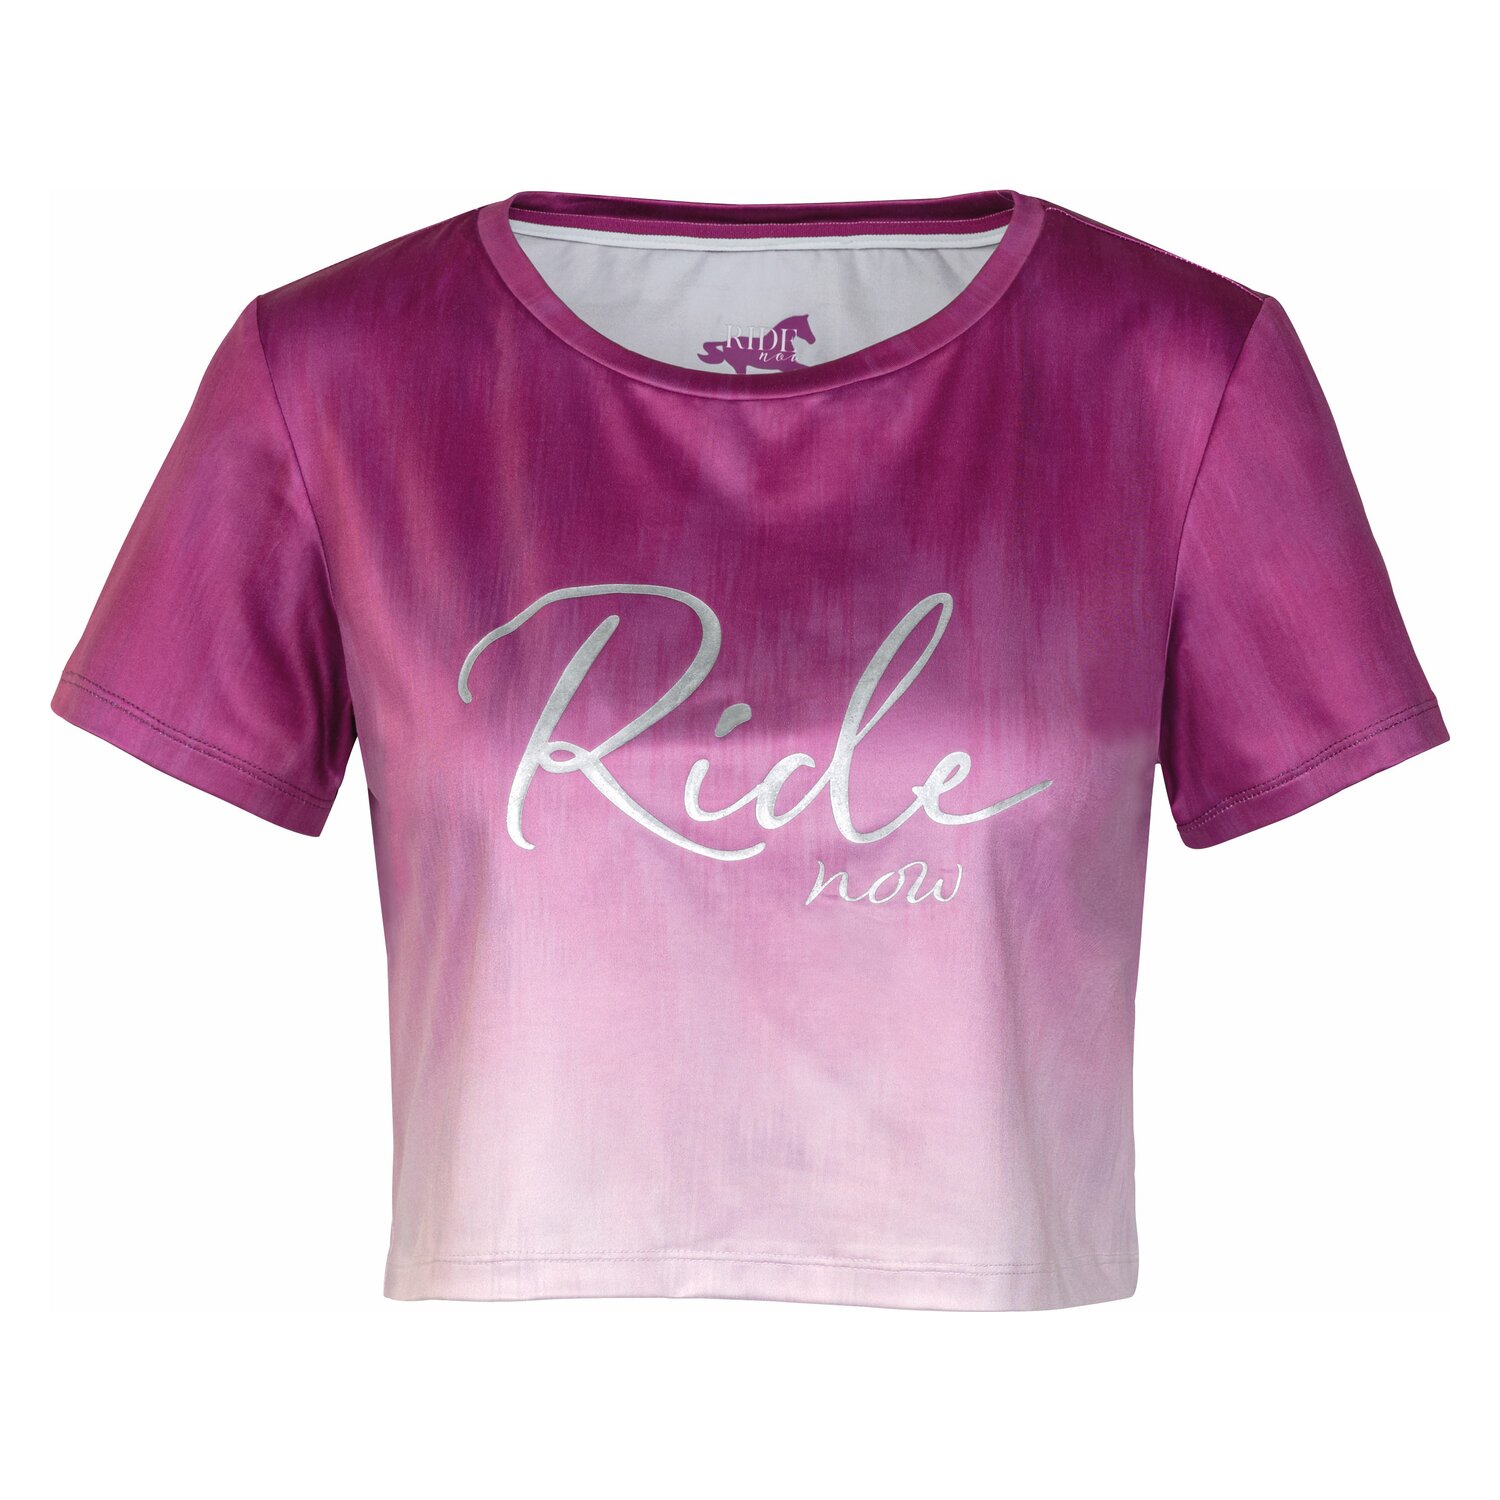 RIDE now T-Shirt Cropped Farbverlauf Toowoomba 